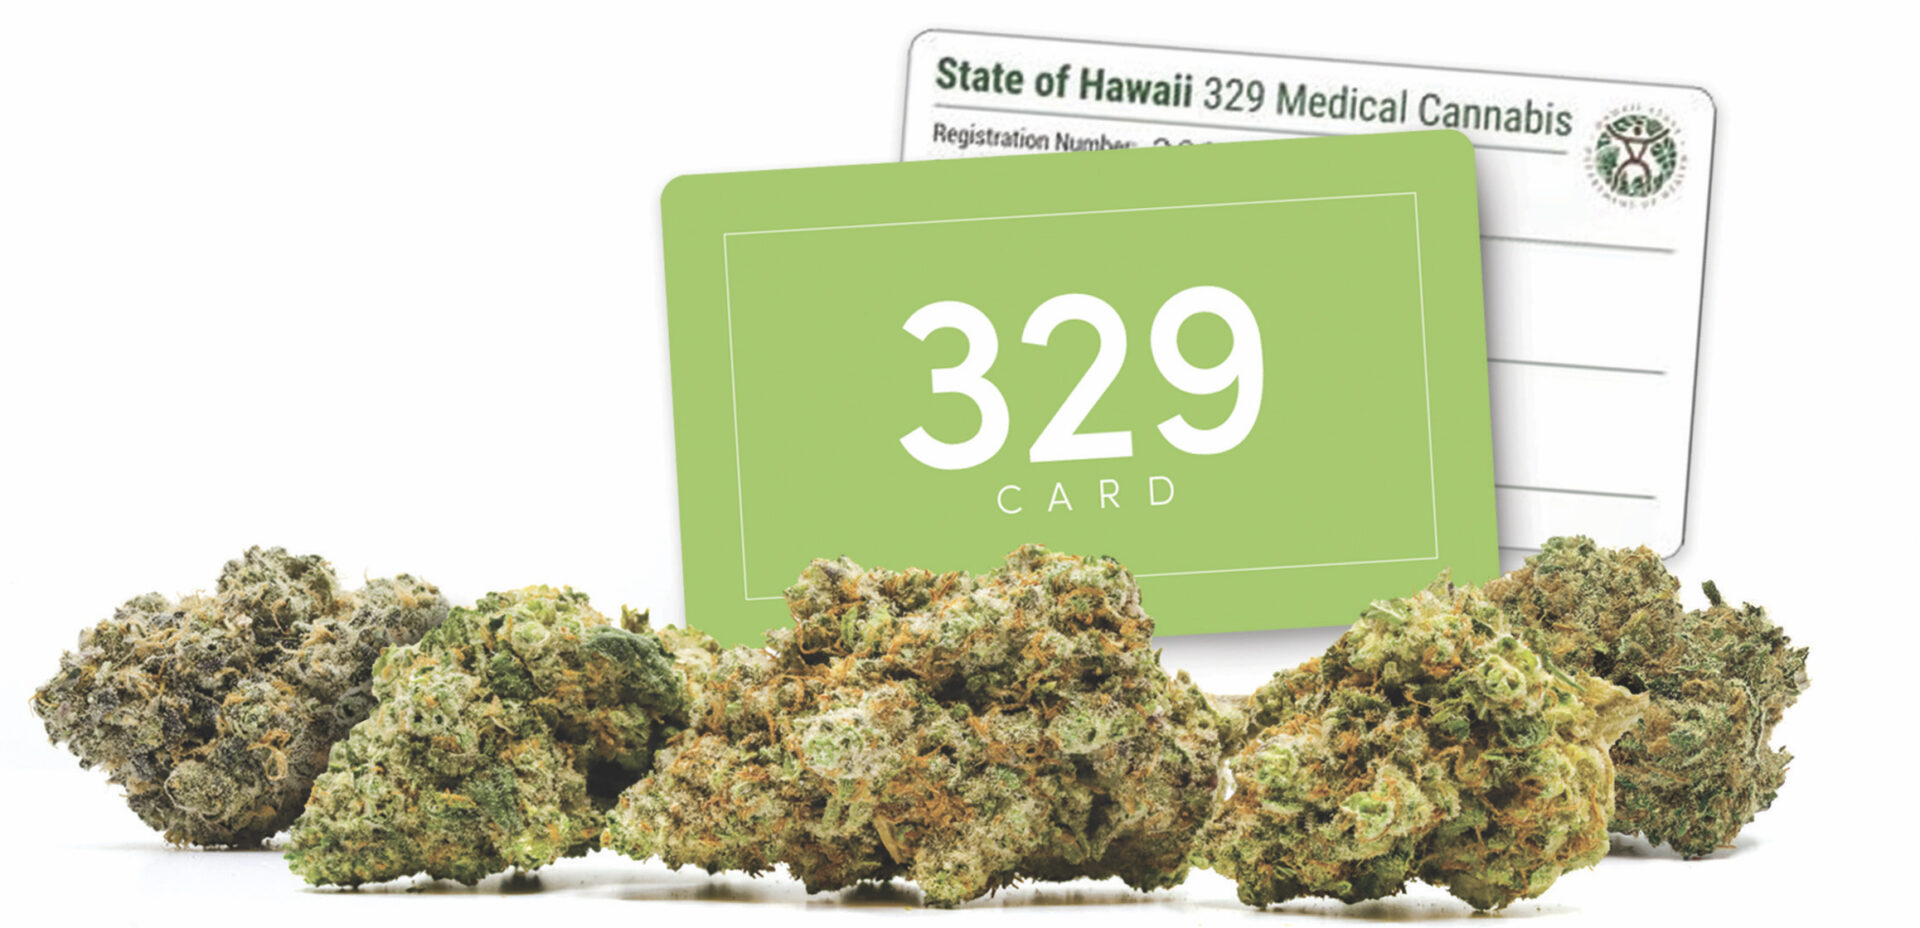 The medical cannabis card in Hawaii.